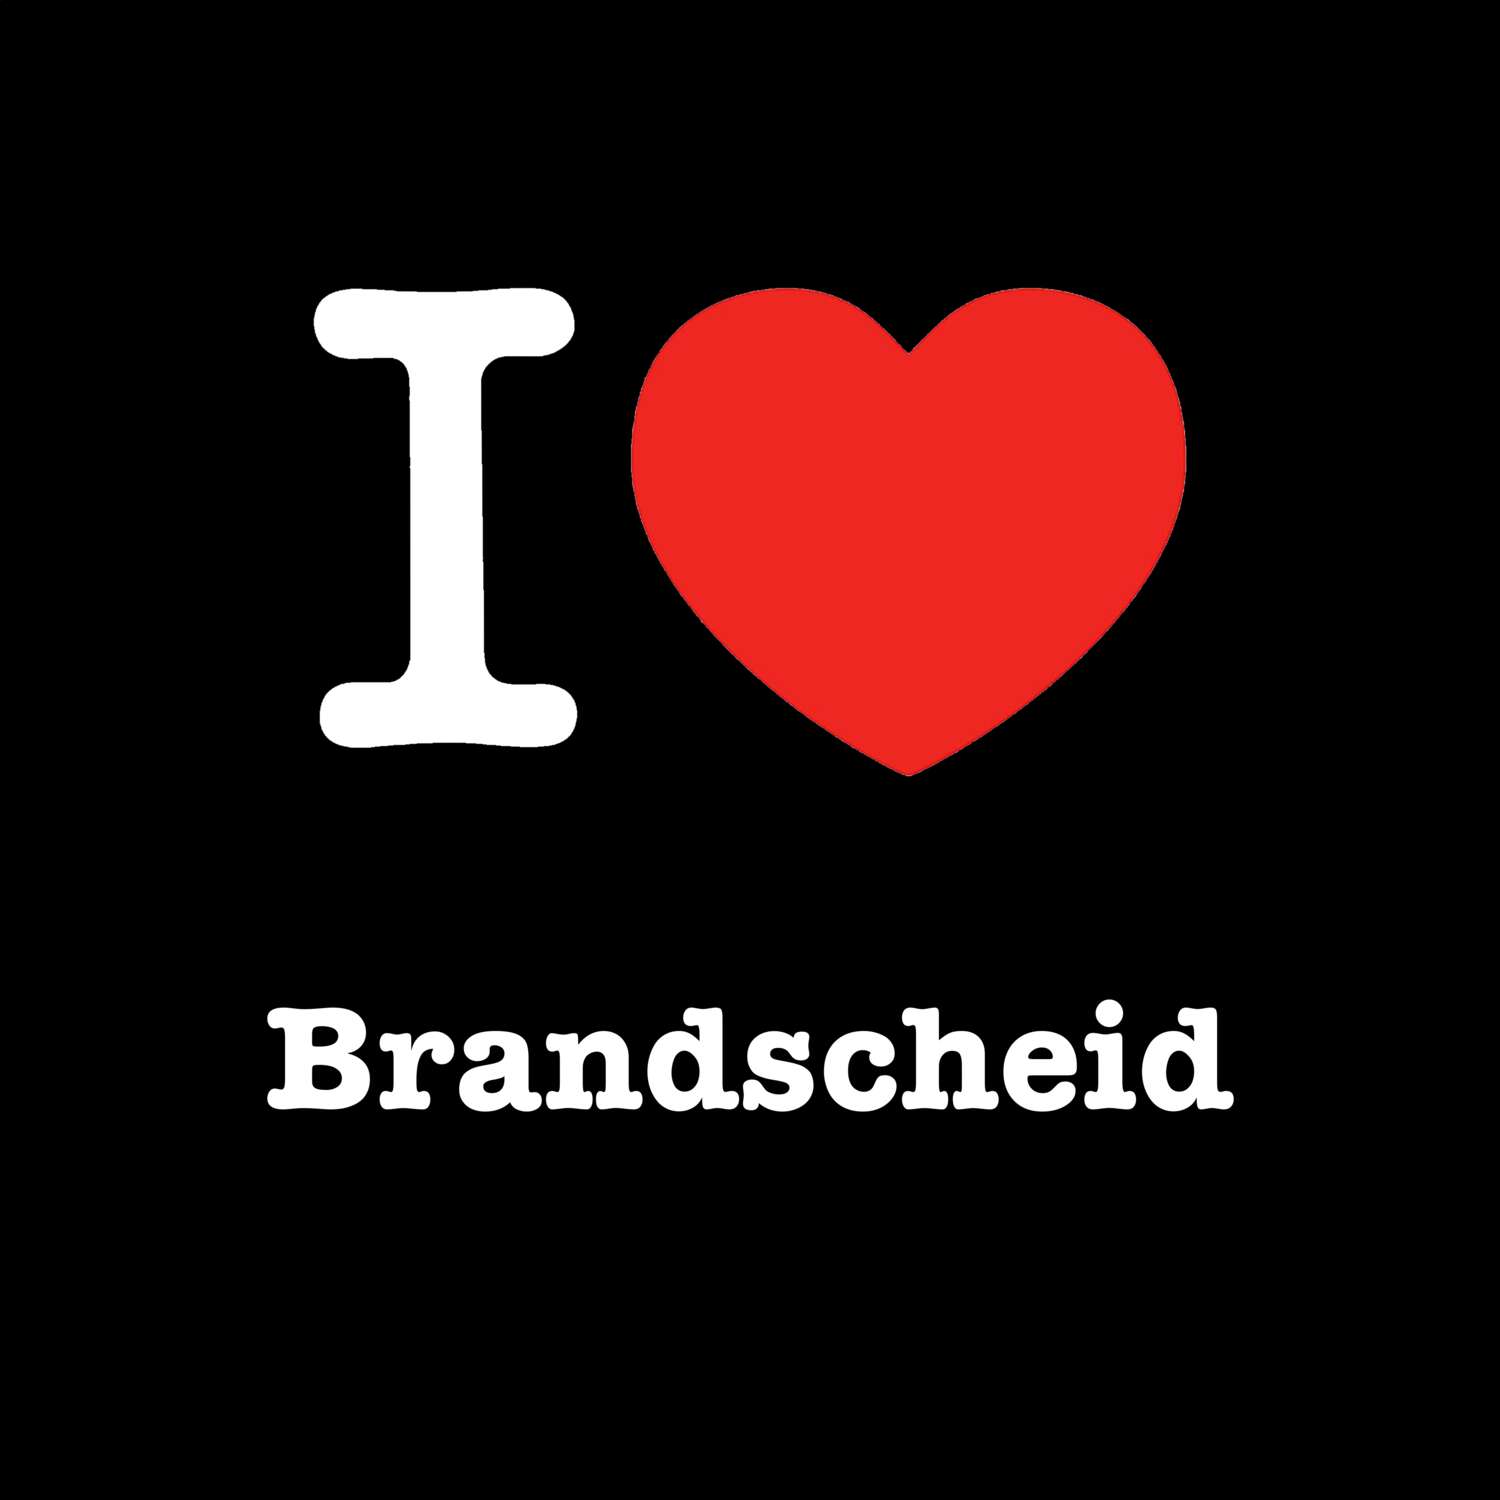 Brandscheid T-Shirt »I love«